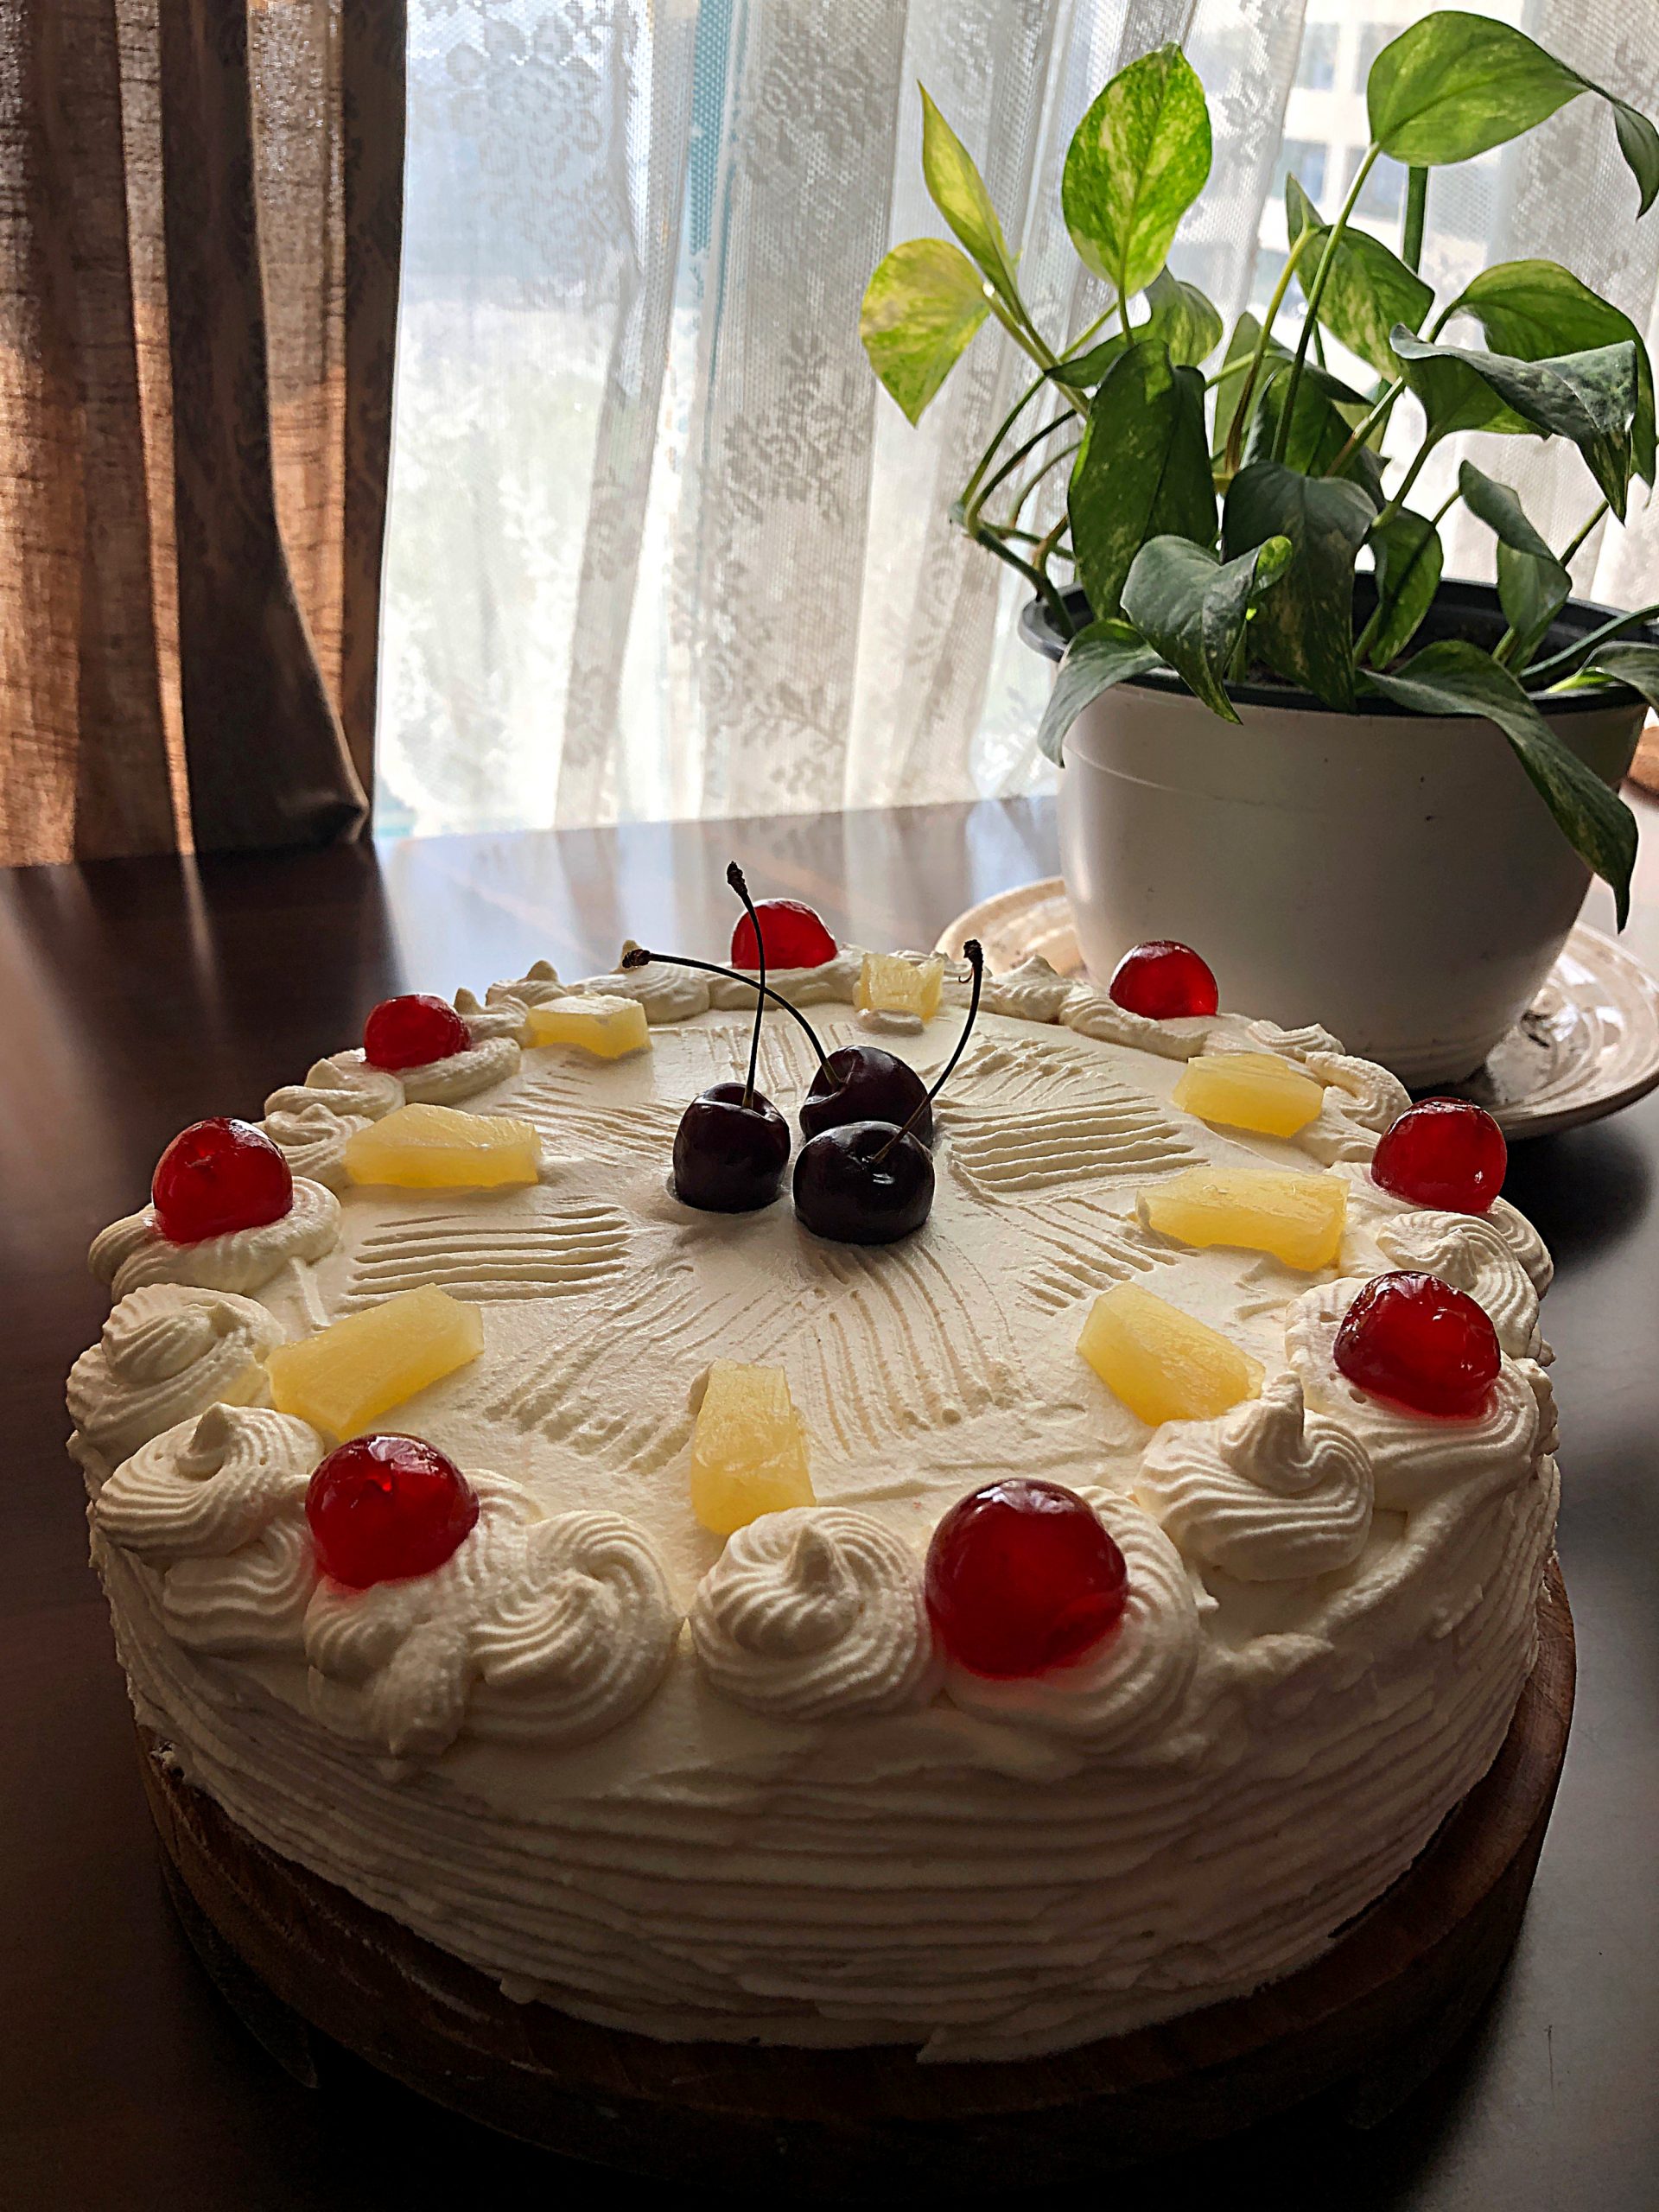 Vanilla pastry cake recipe | vanilla cake recipe | vanilla cool cake recipe  - YouTube